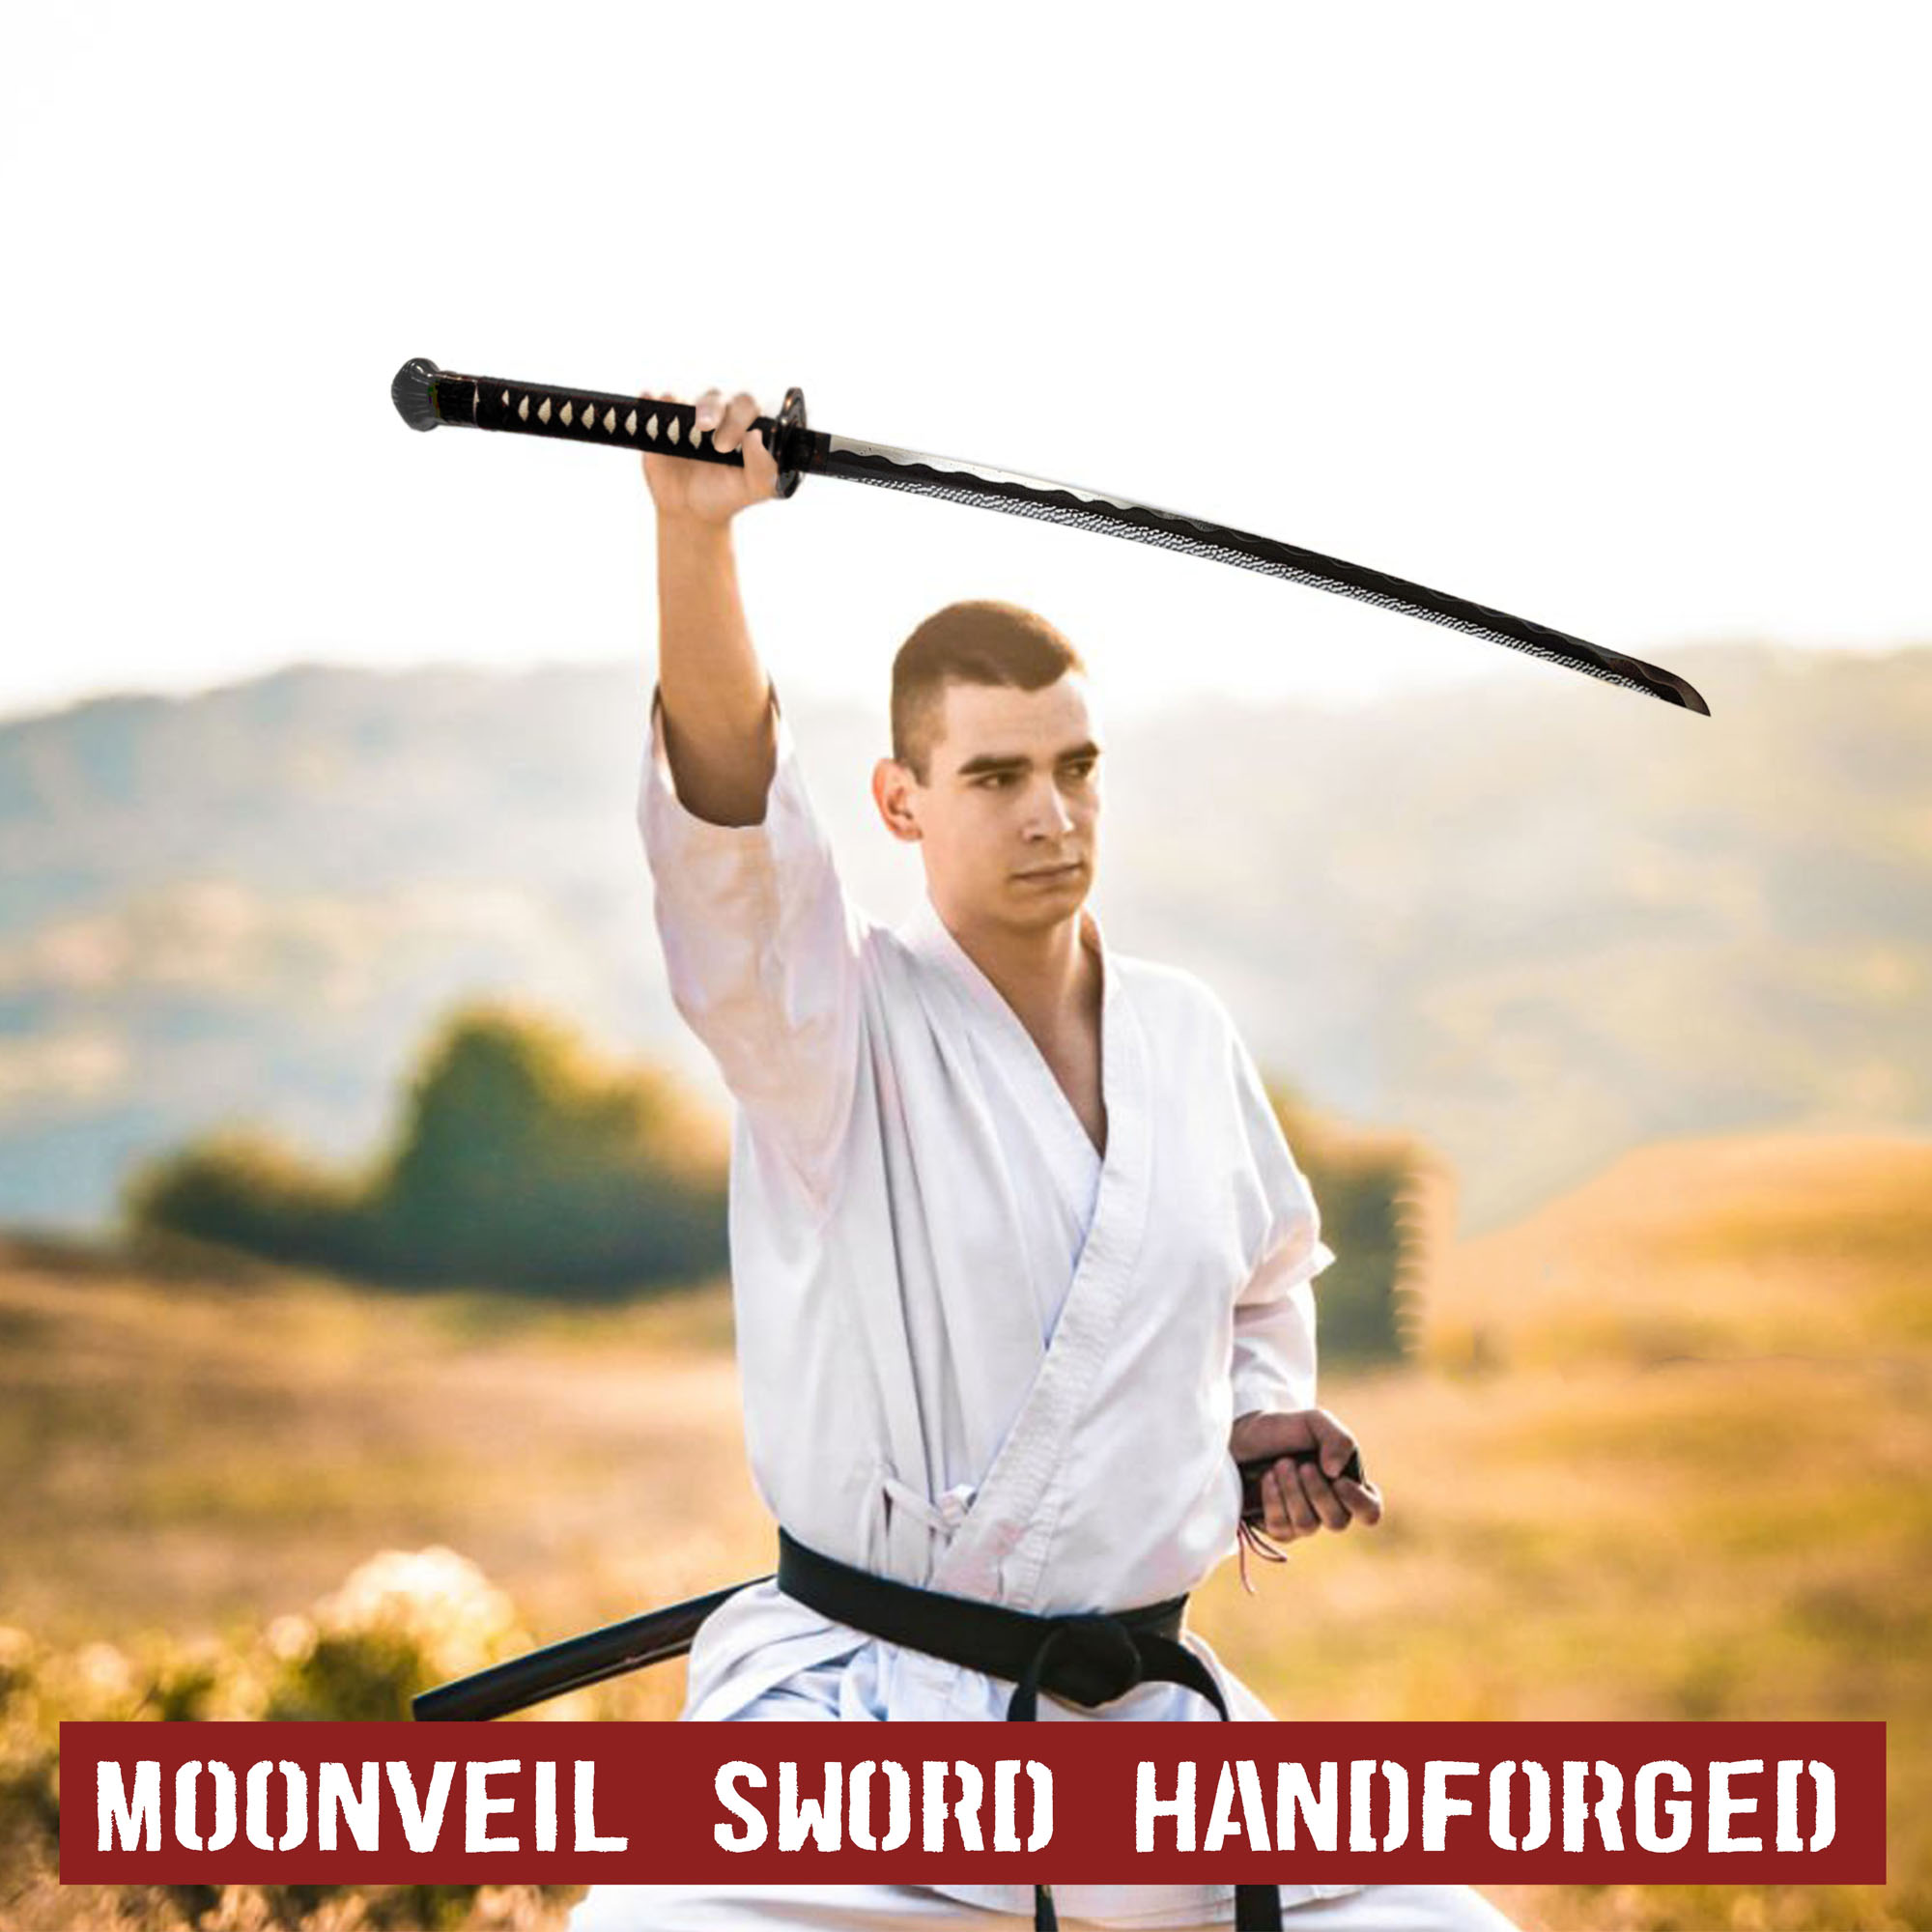 Elden Ring - Moonveil Sword with Sheath, Handforged